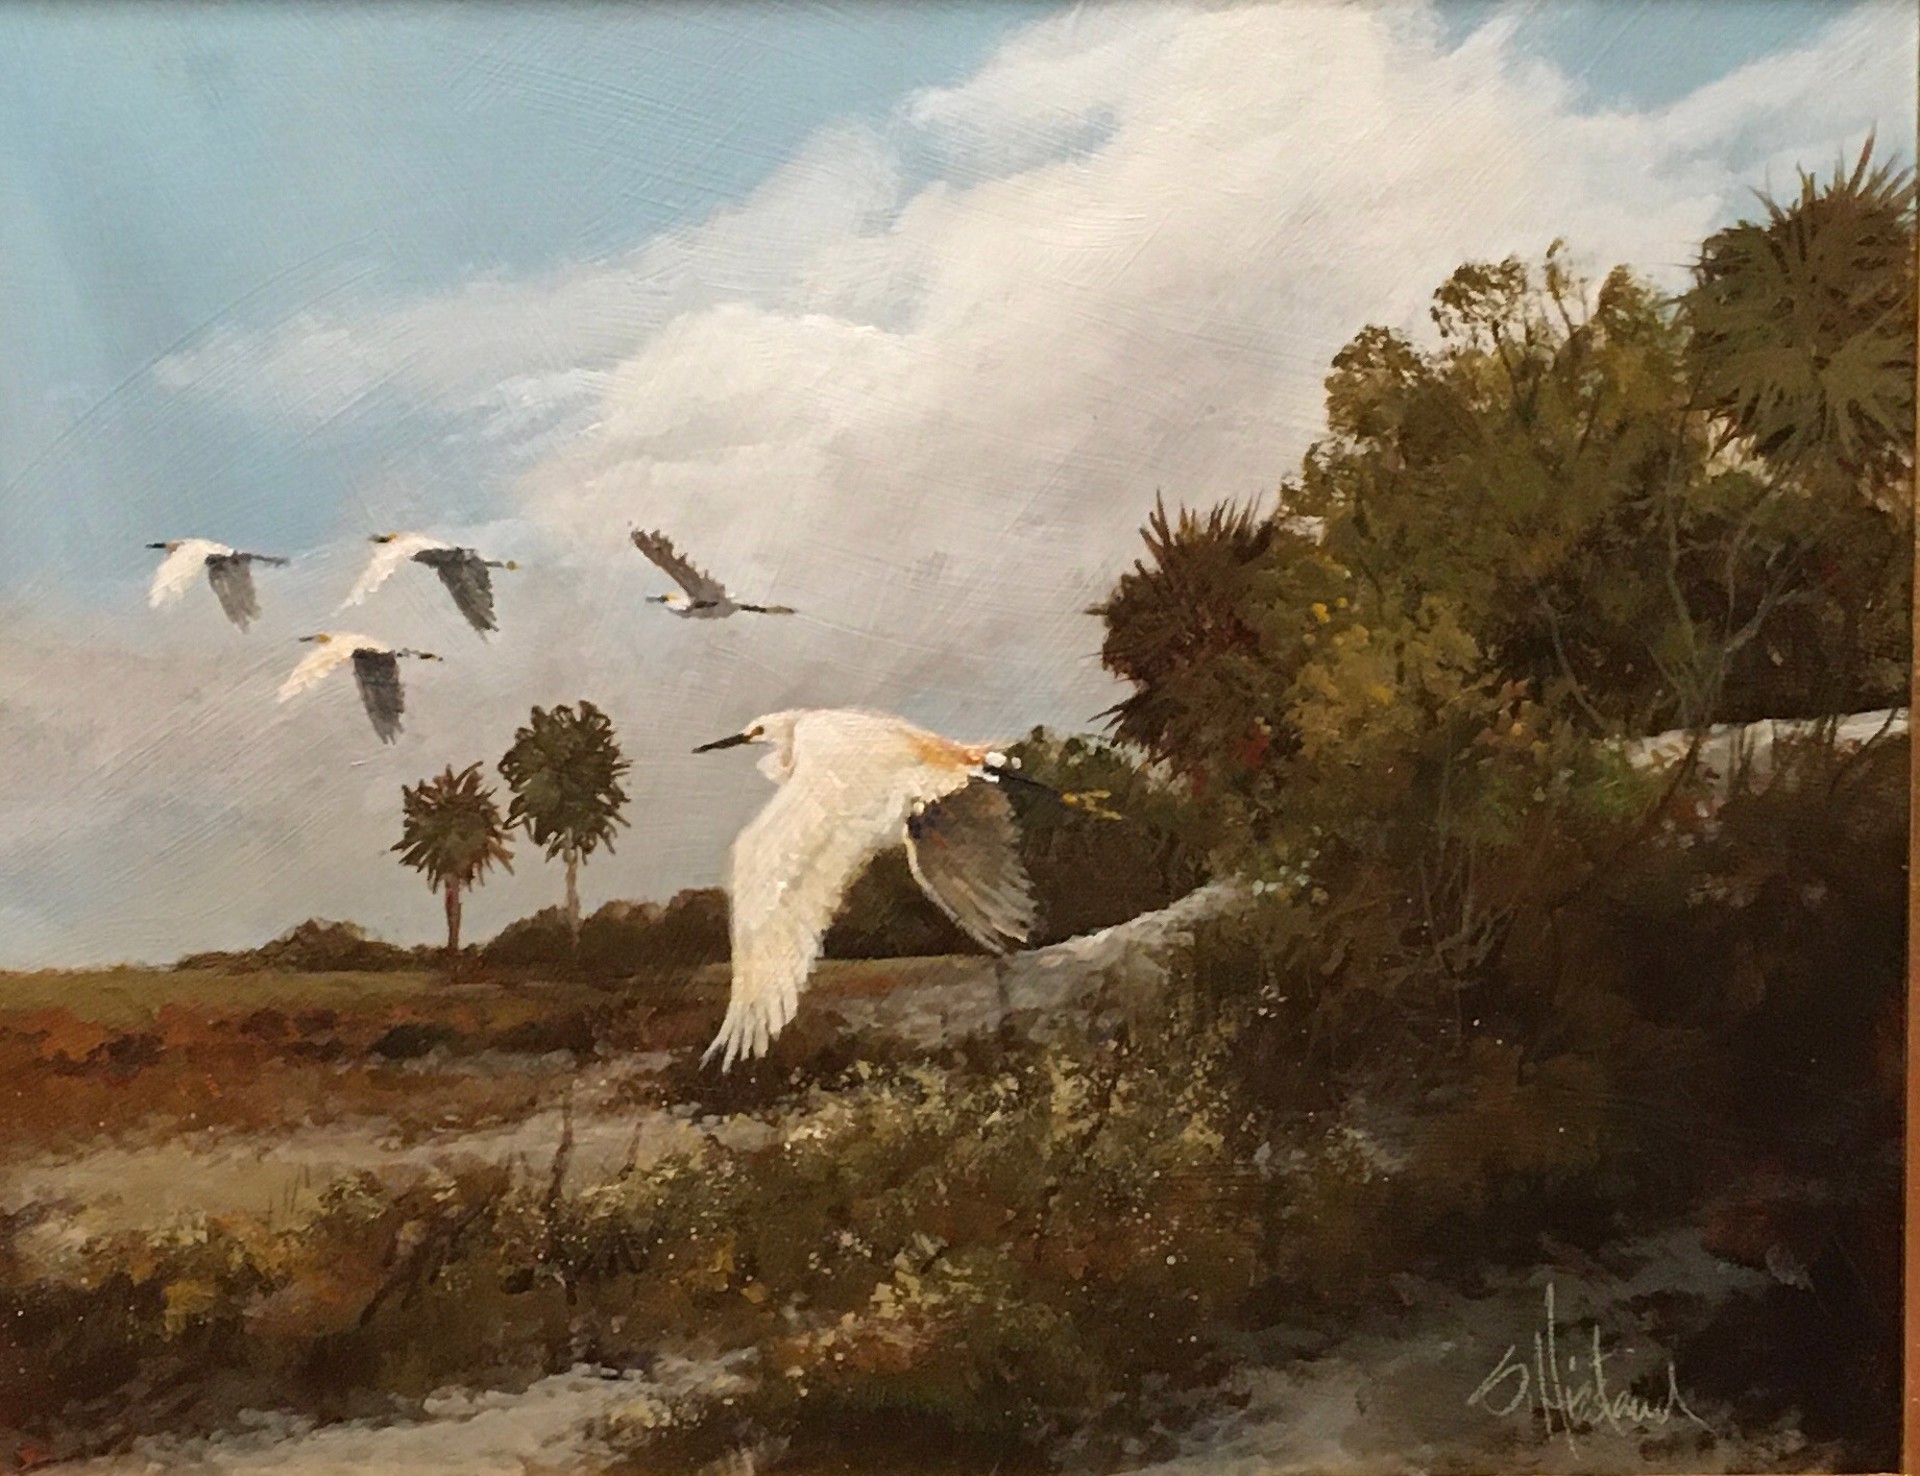 Cattle Egret Crossing by Scott Hiestand